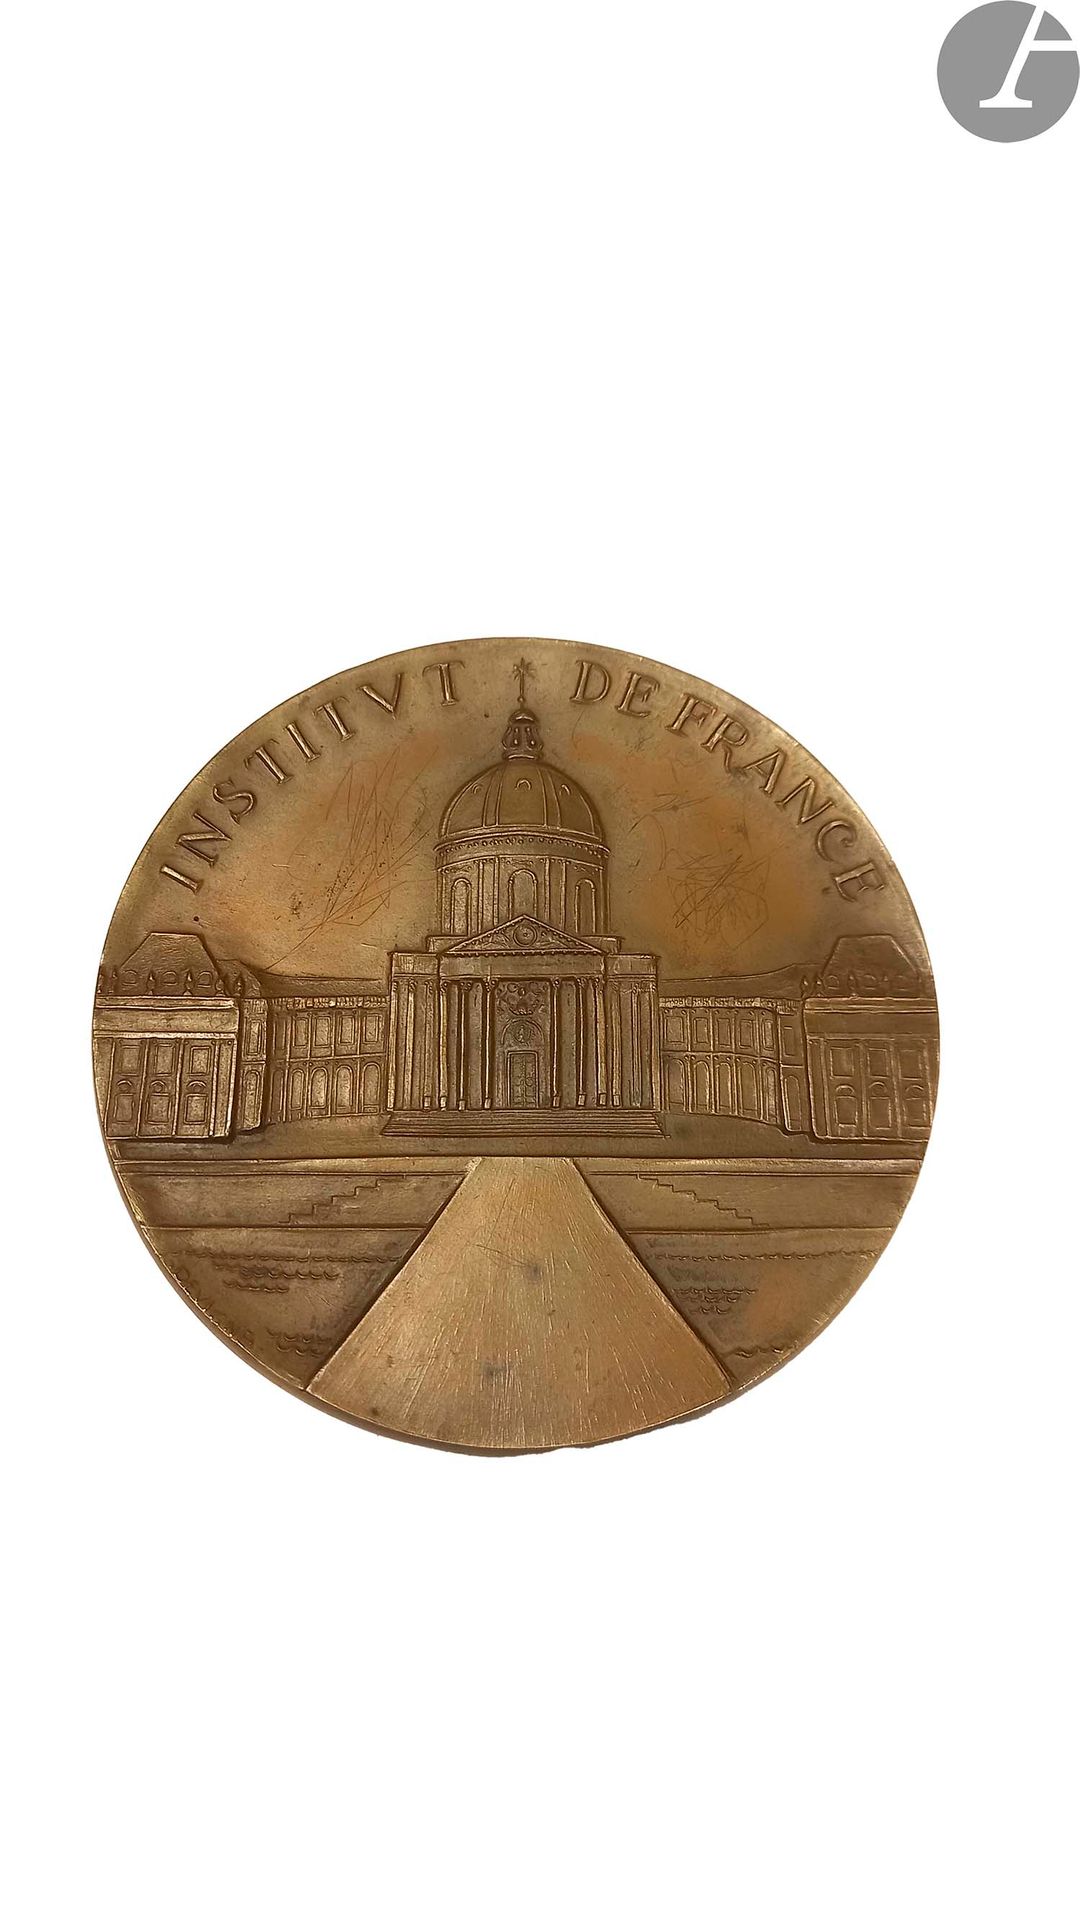 Null 雅克-德维尼的铜牌。
正面：法兰西学院。- 反面：不朽（穹顶）。
直径：9.5厘米T
.B
.